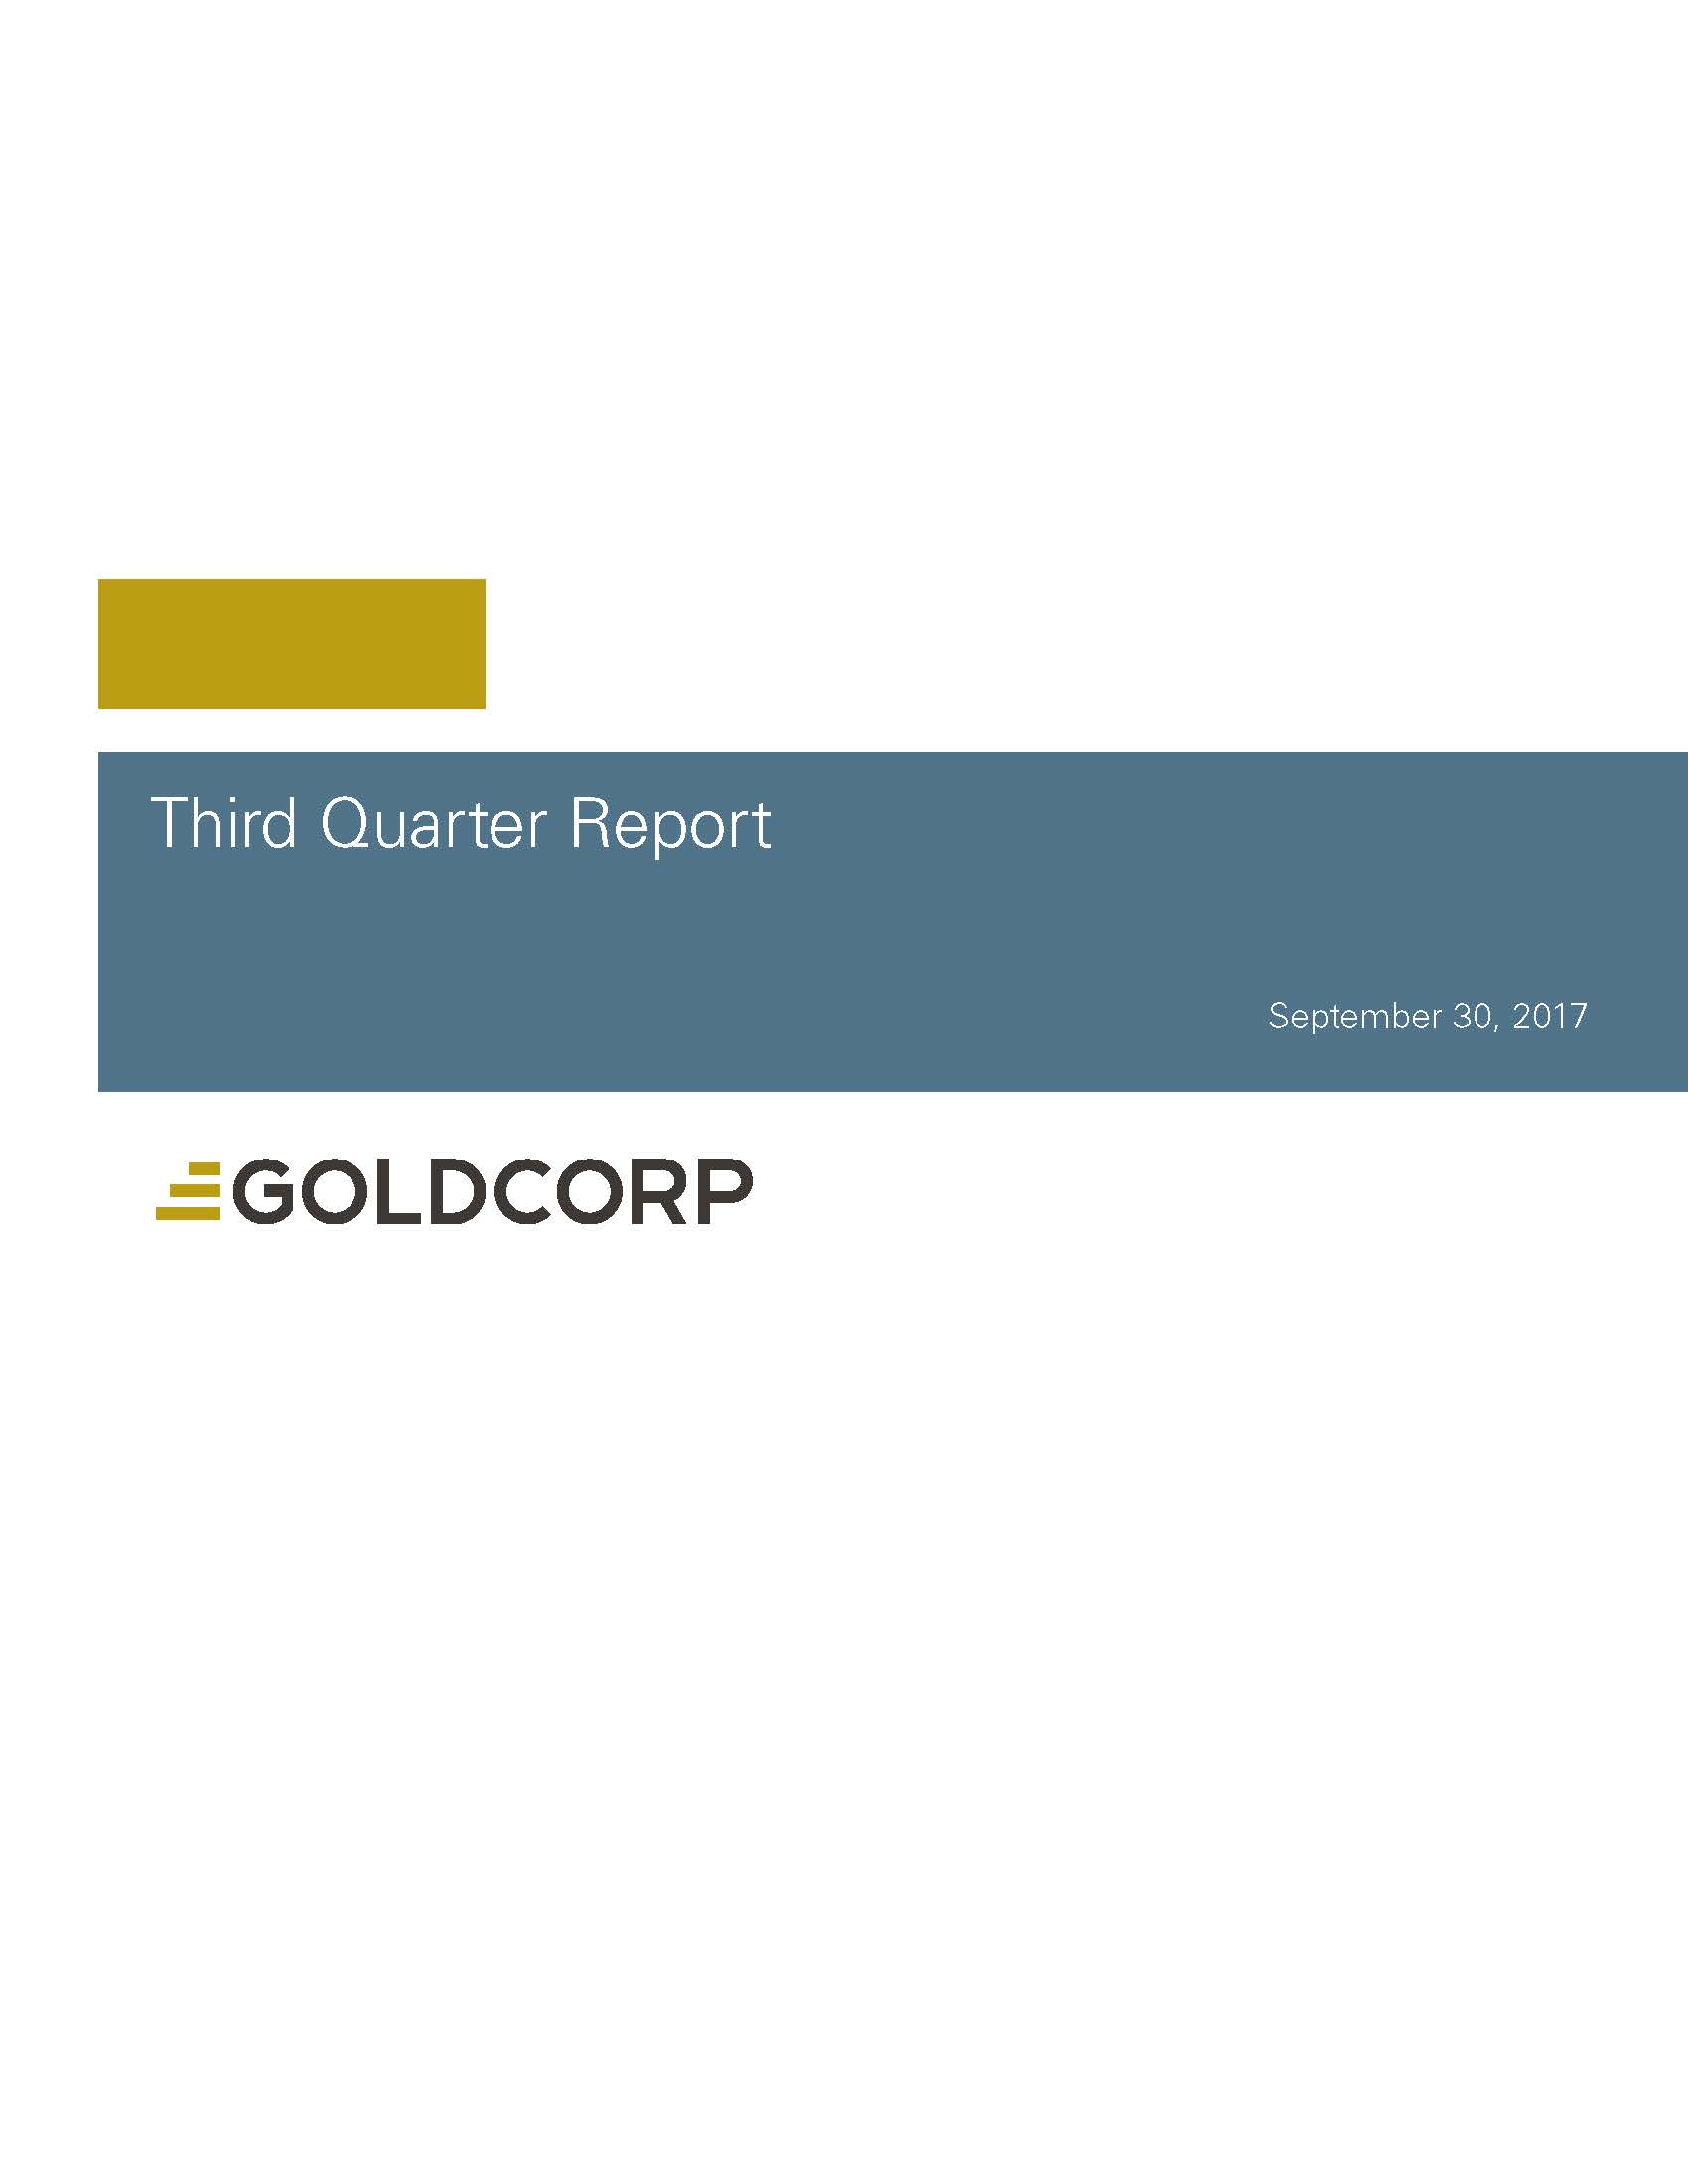 goldcorp2017q3cover.jpg